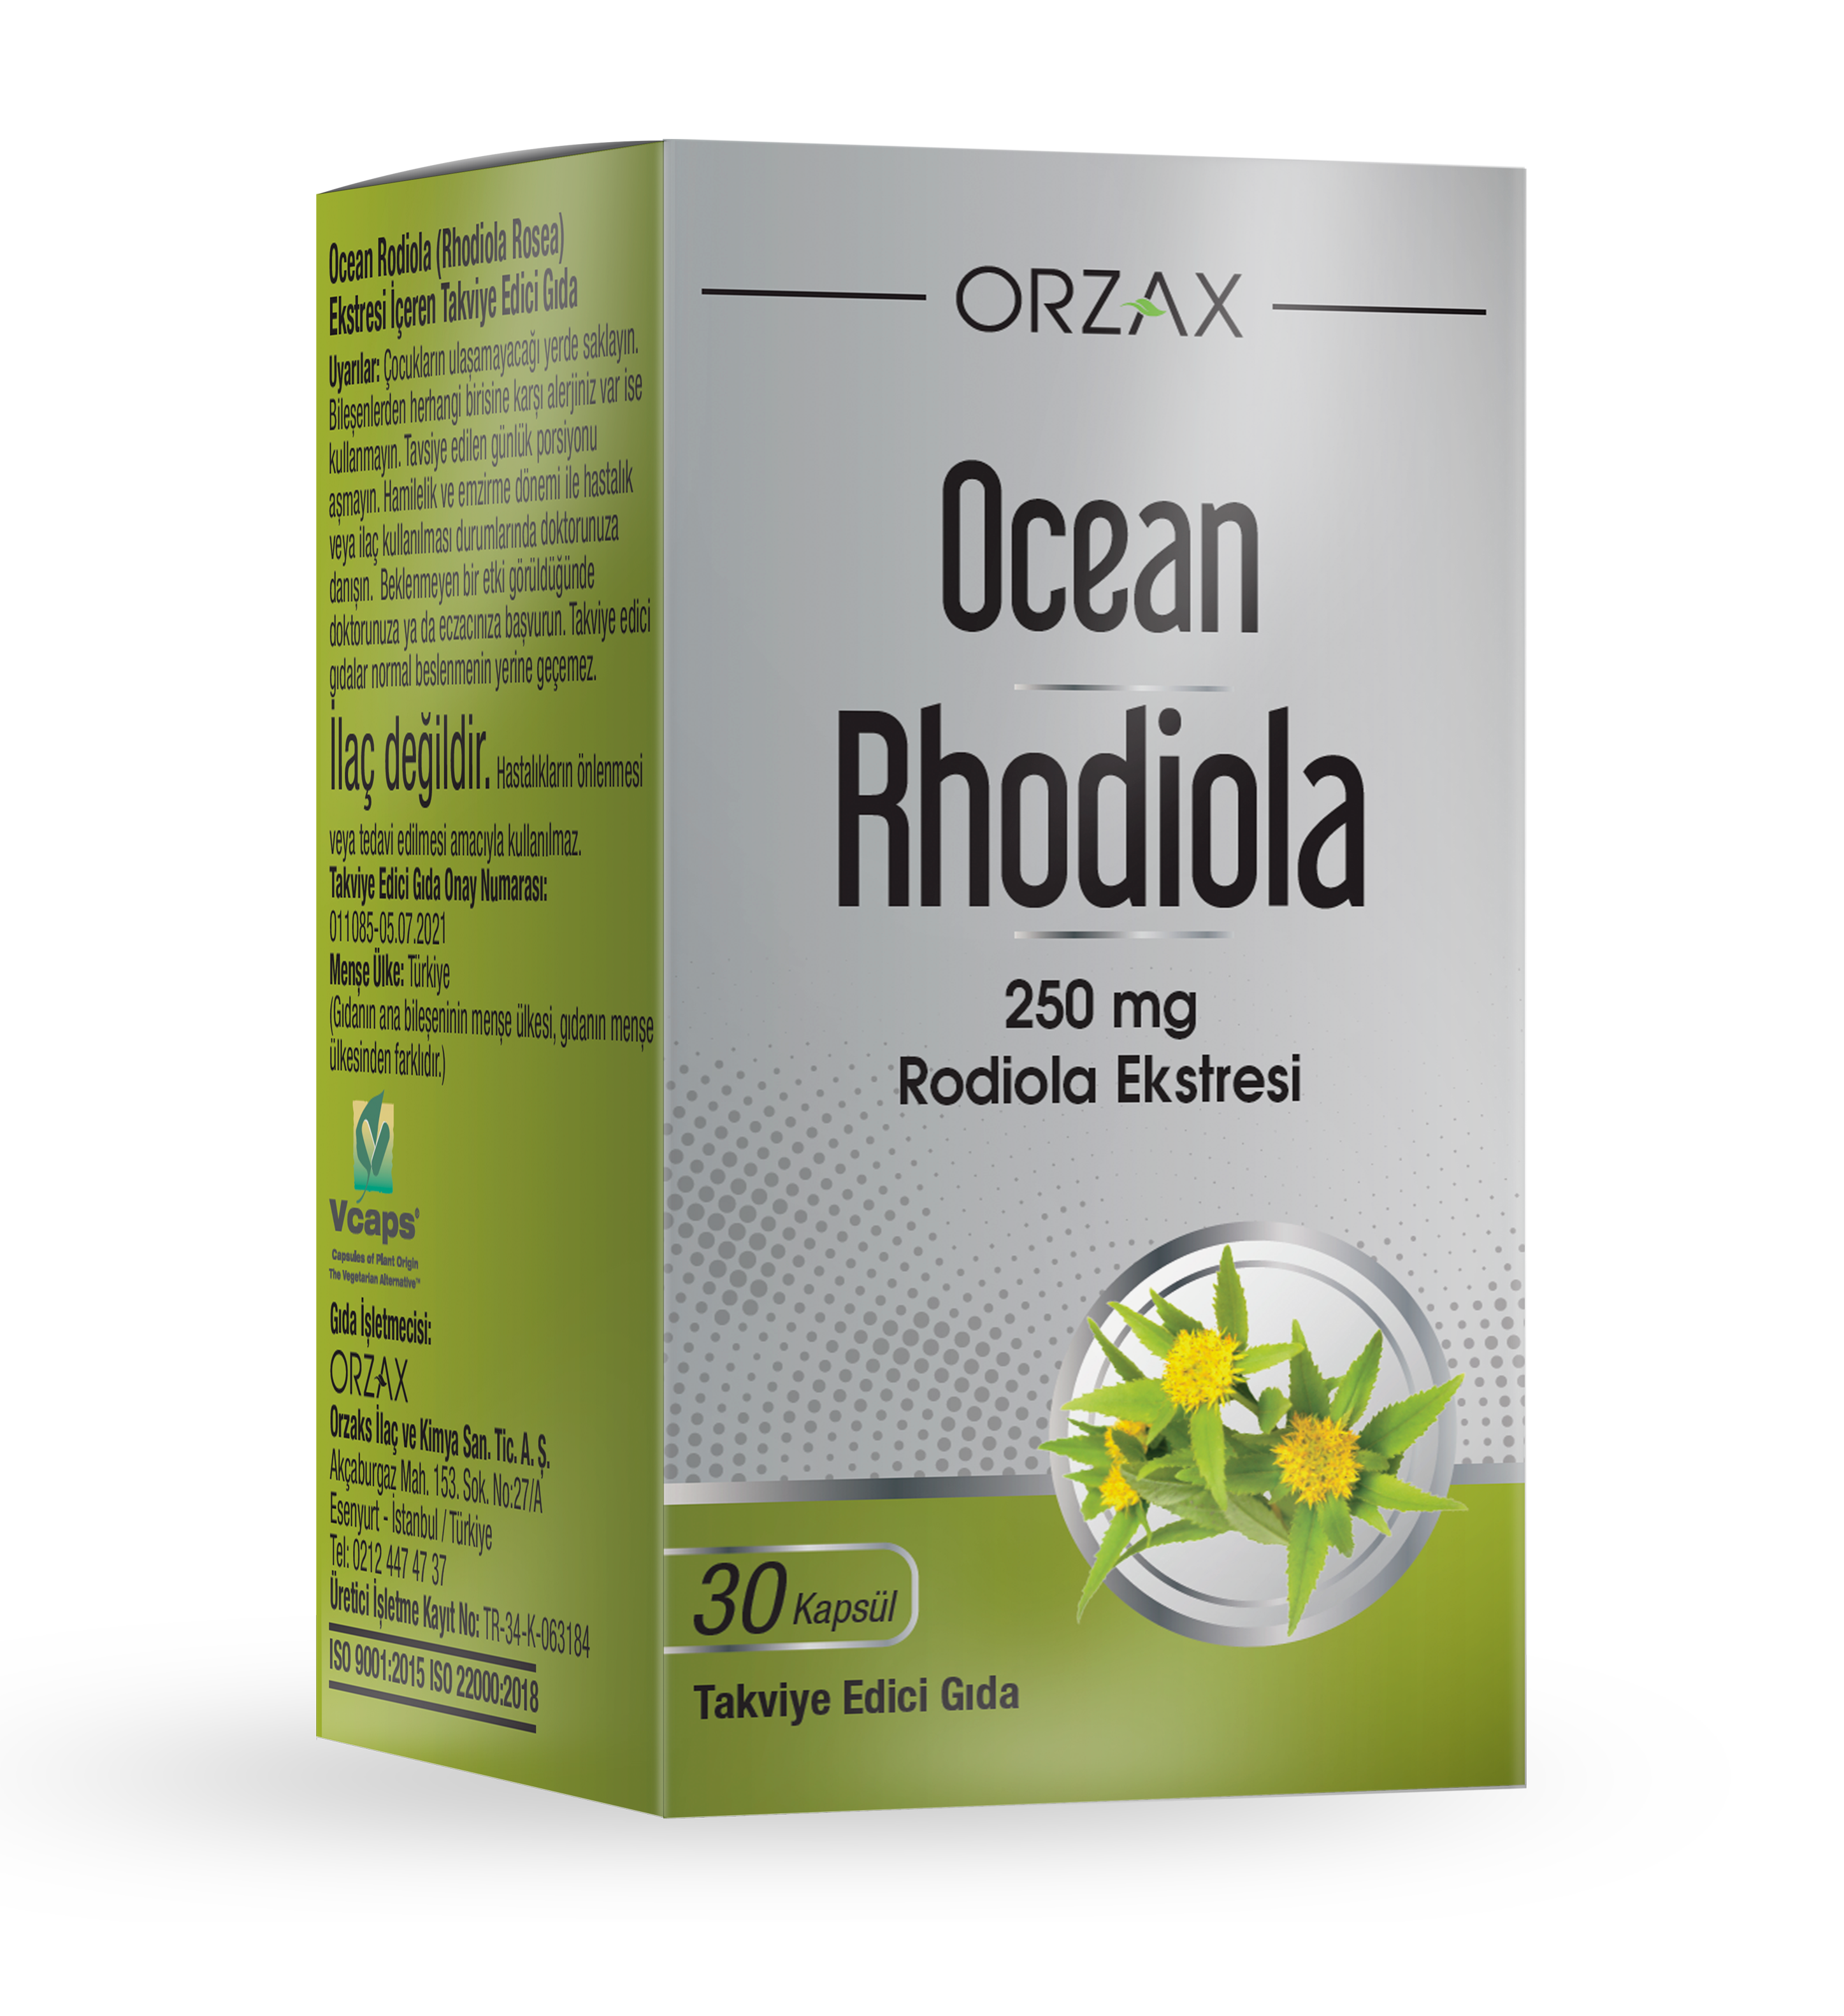 ocean rhodiola kapsul orzax com tr